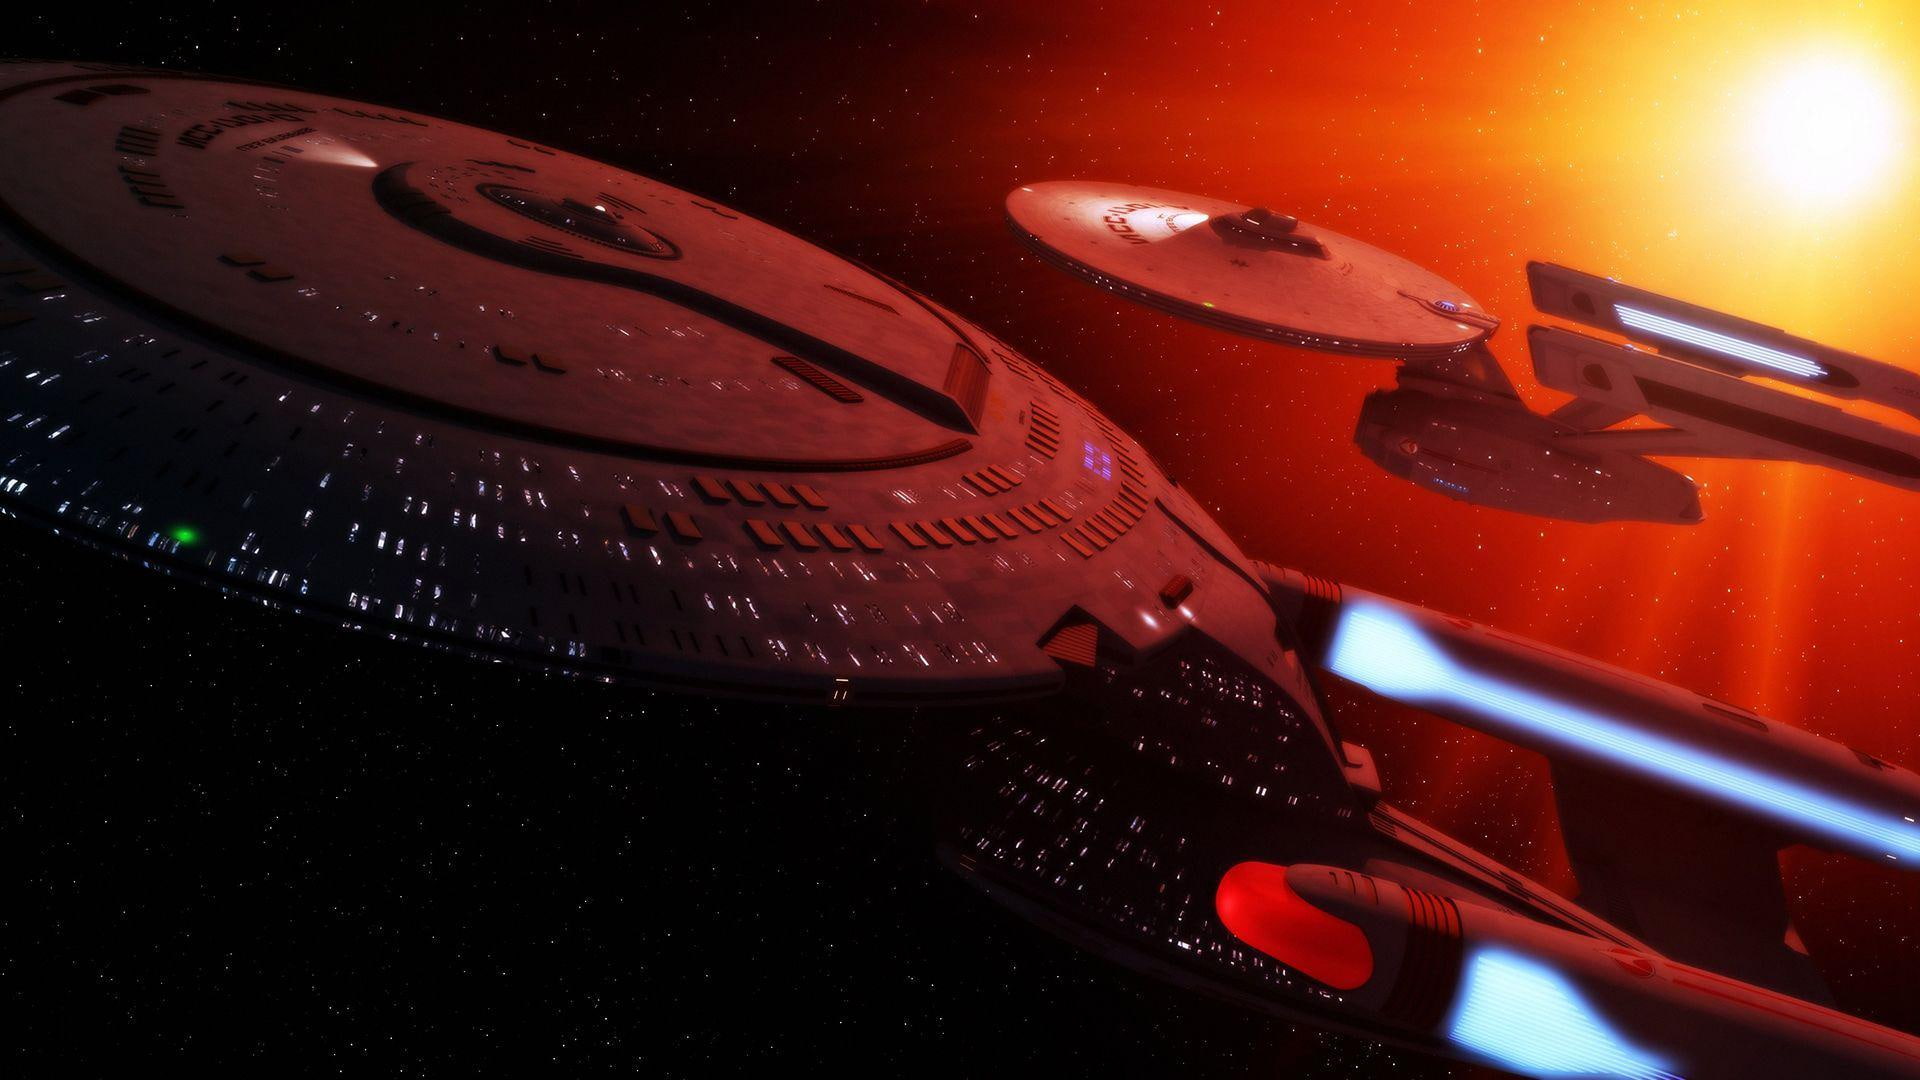 U.S.S. Enterprise - Star Trek, the enterprise star trek, movies